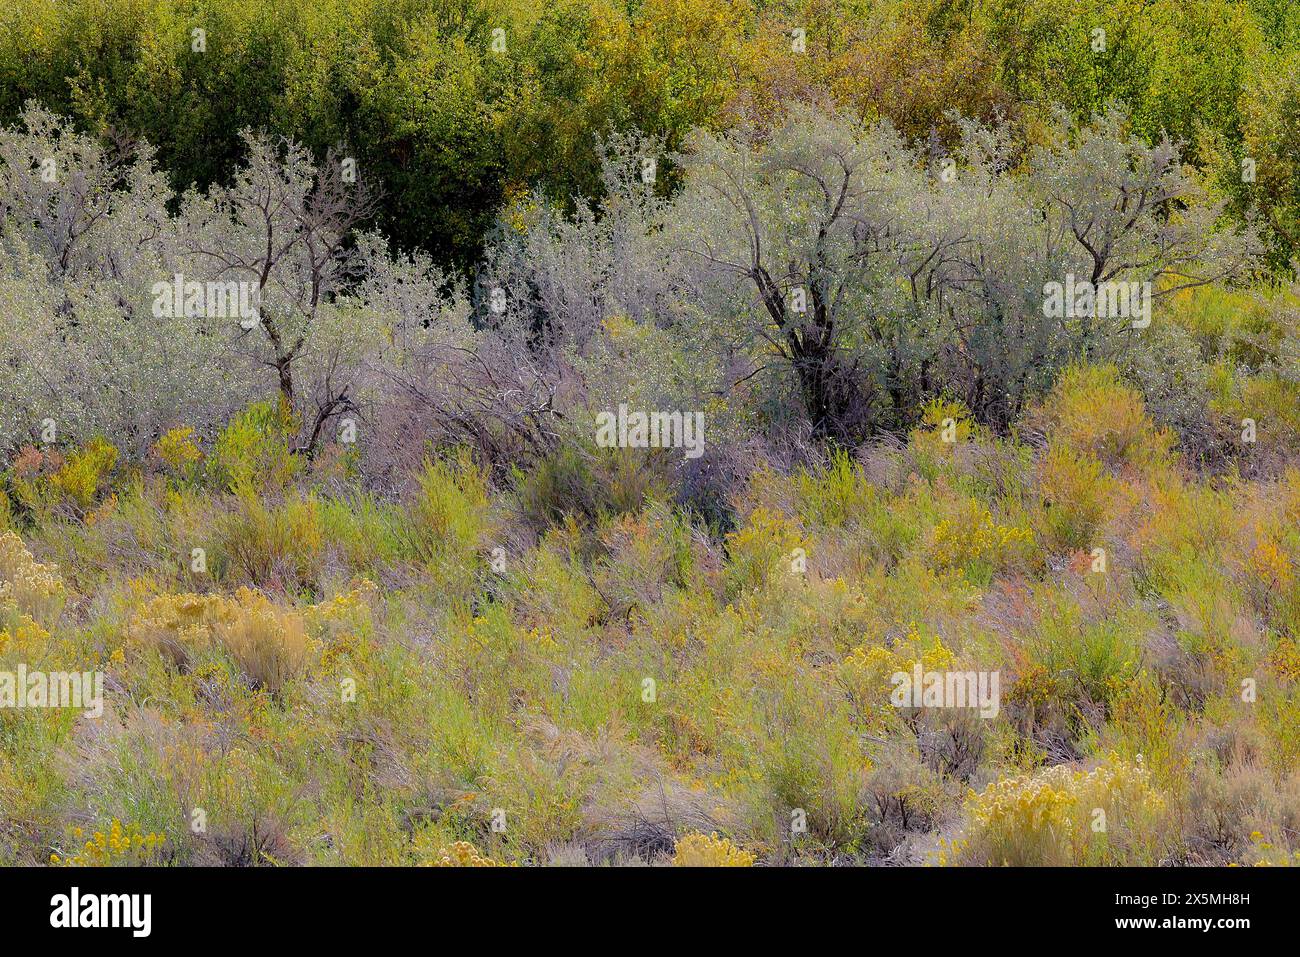 USA, California, Bishop. Bishop Valley with flowering rabbitbrush in autumn along highway Stock Photo